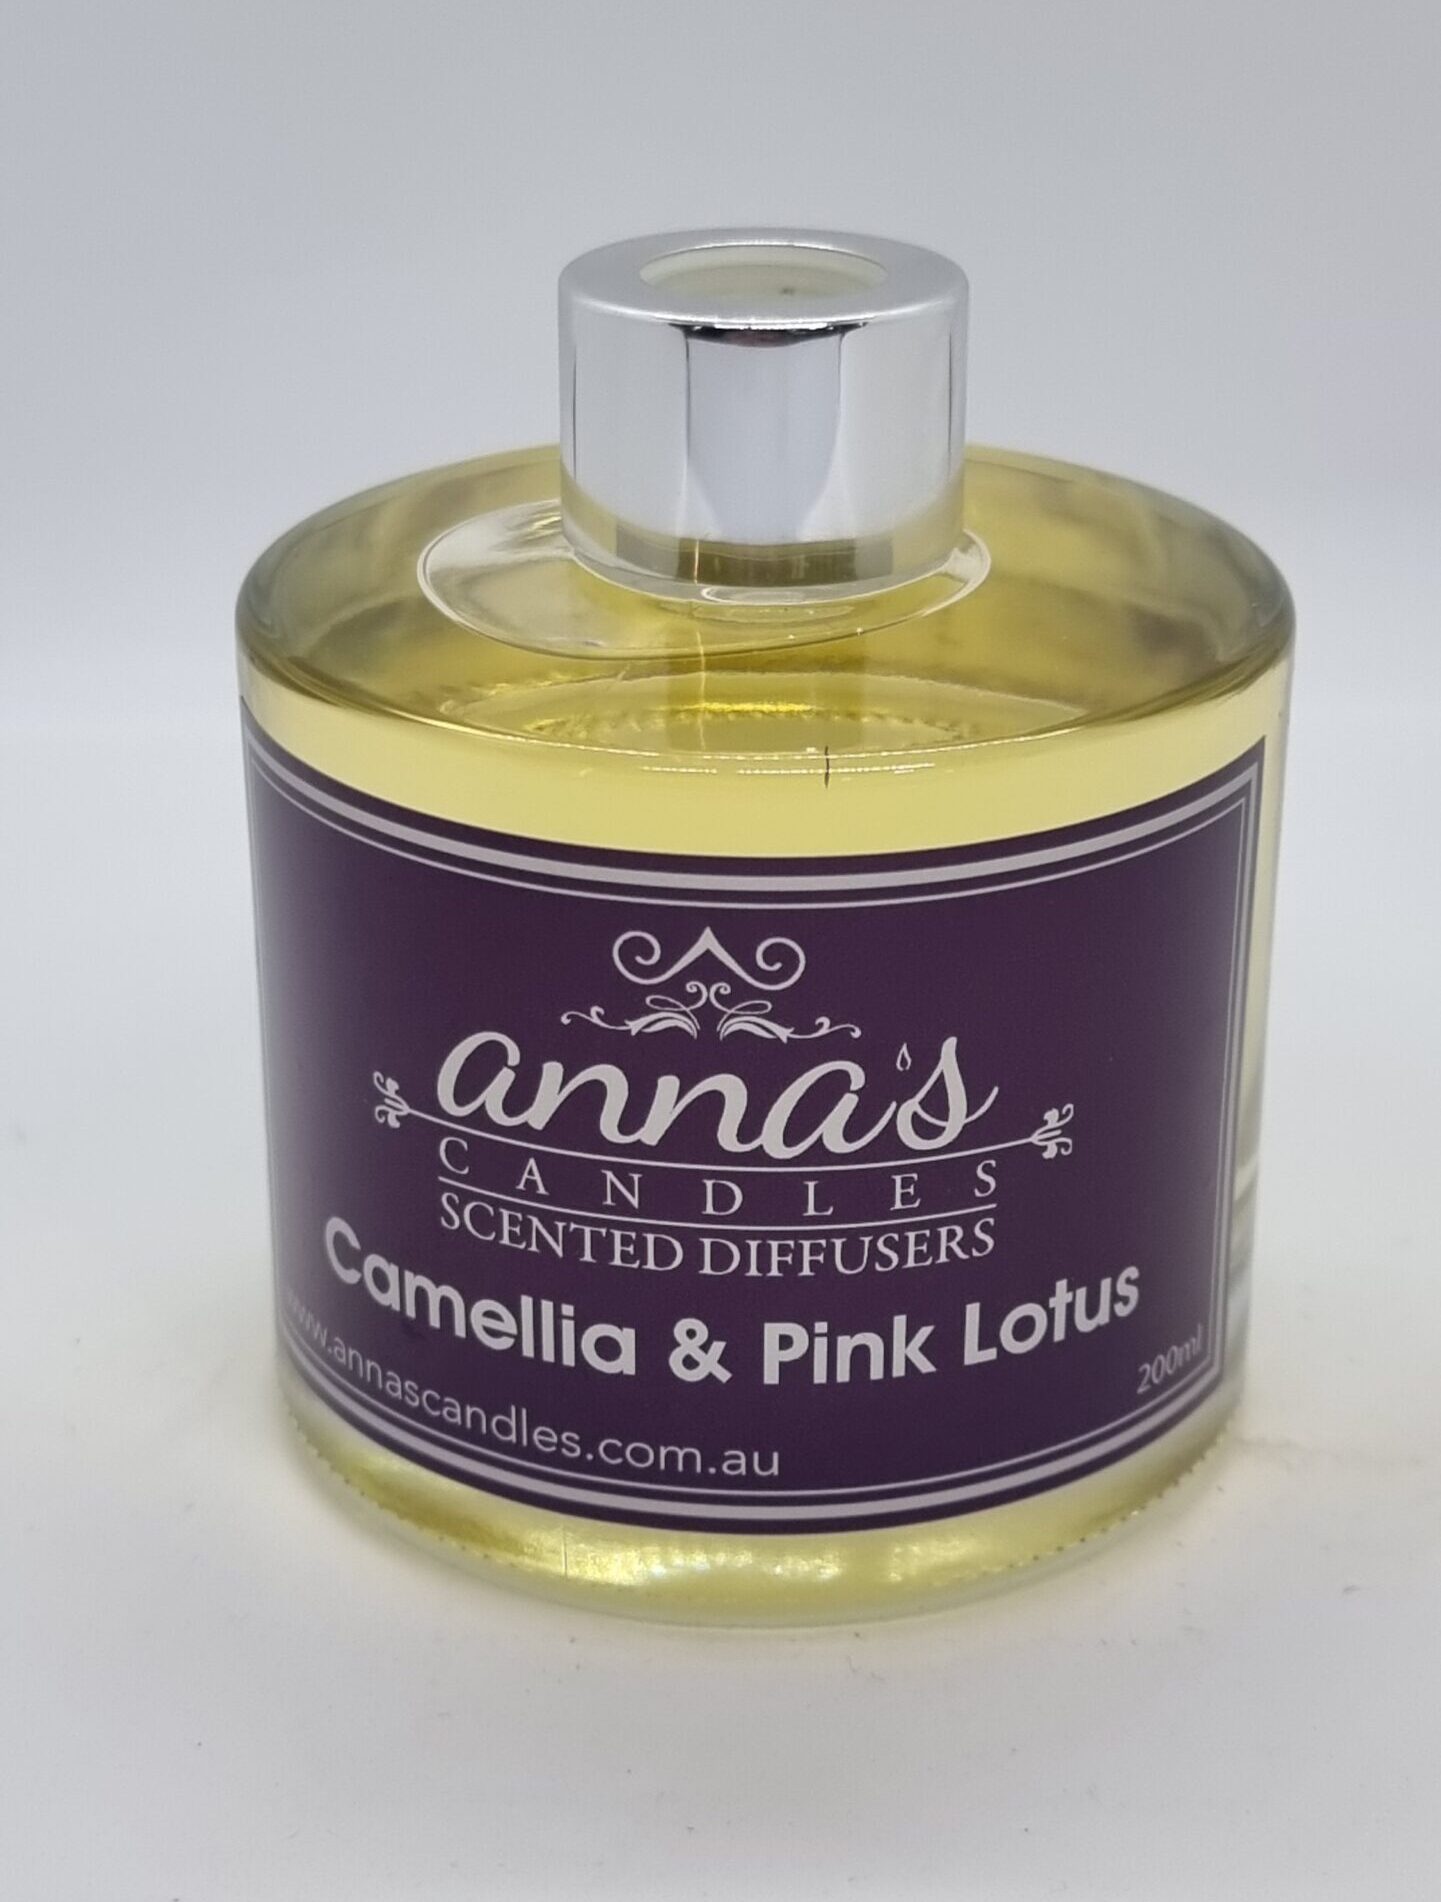 Camellia & Pink Lotus 200ml Diffuser